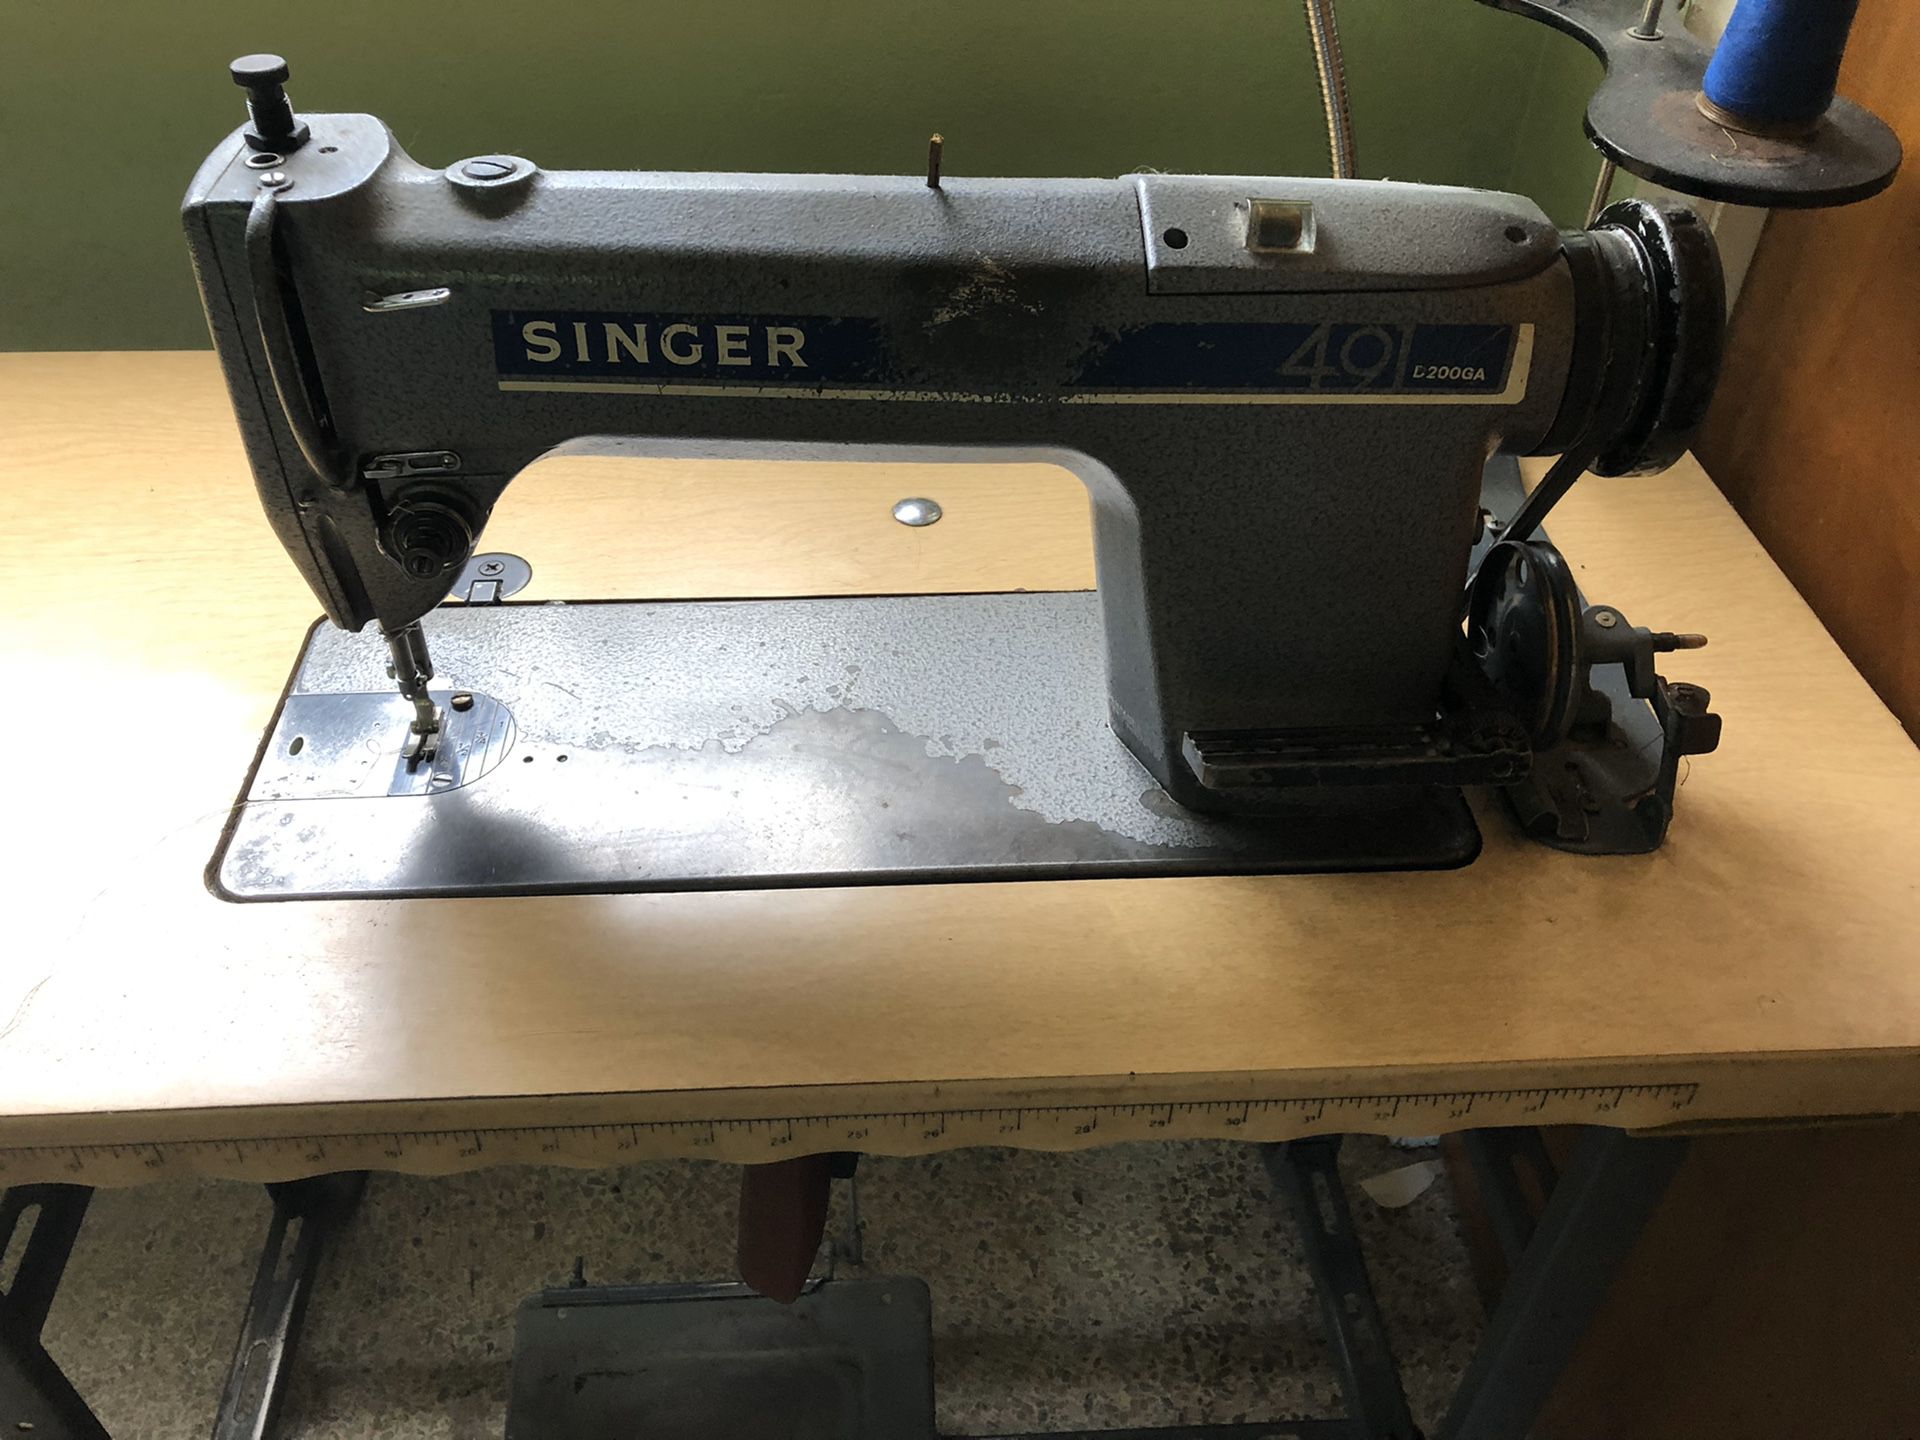 Singer single-needle industrial sewing machine